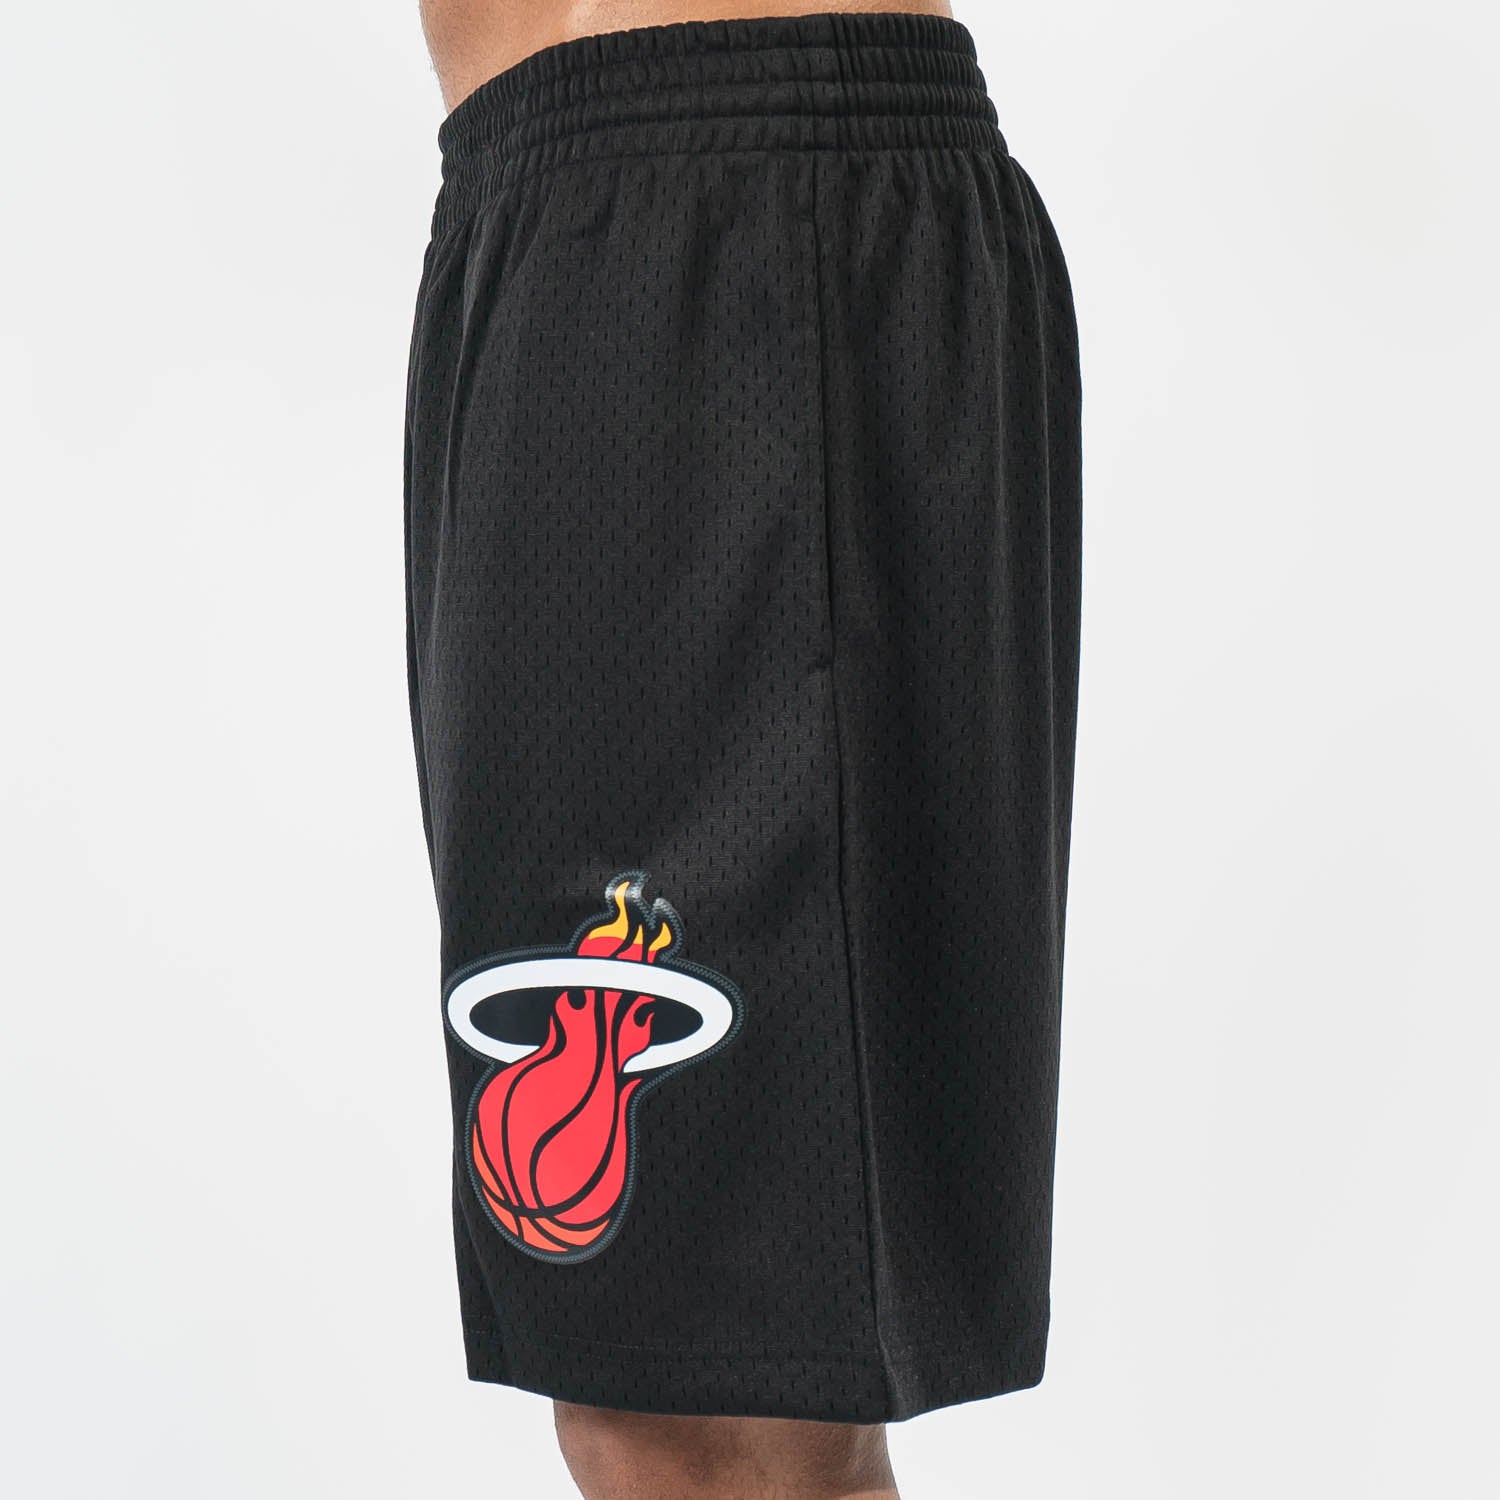 Nba Heat Black Shorts Embroidered Vintage Sports Training Shorts Basketball  Shorts